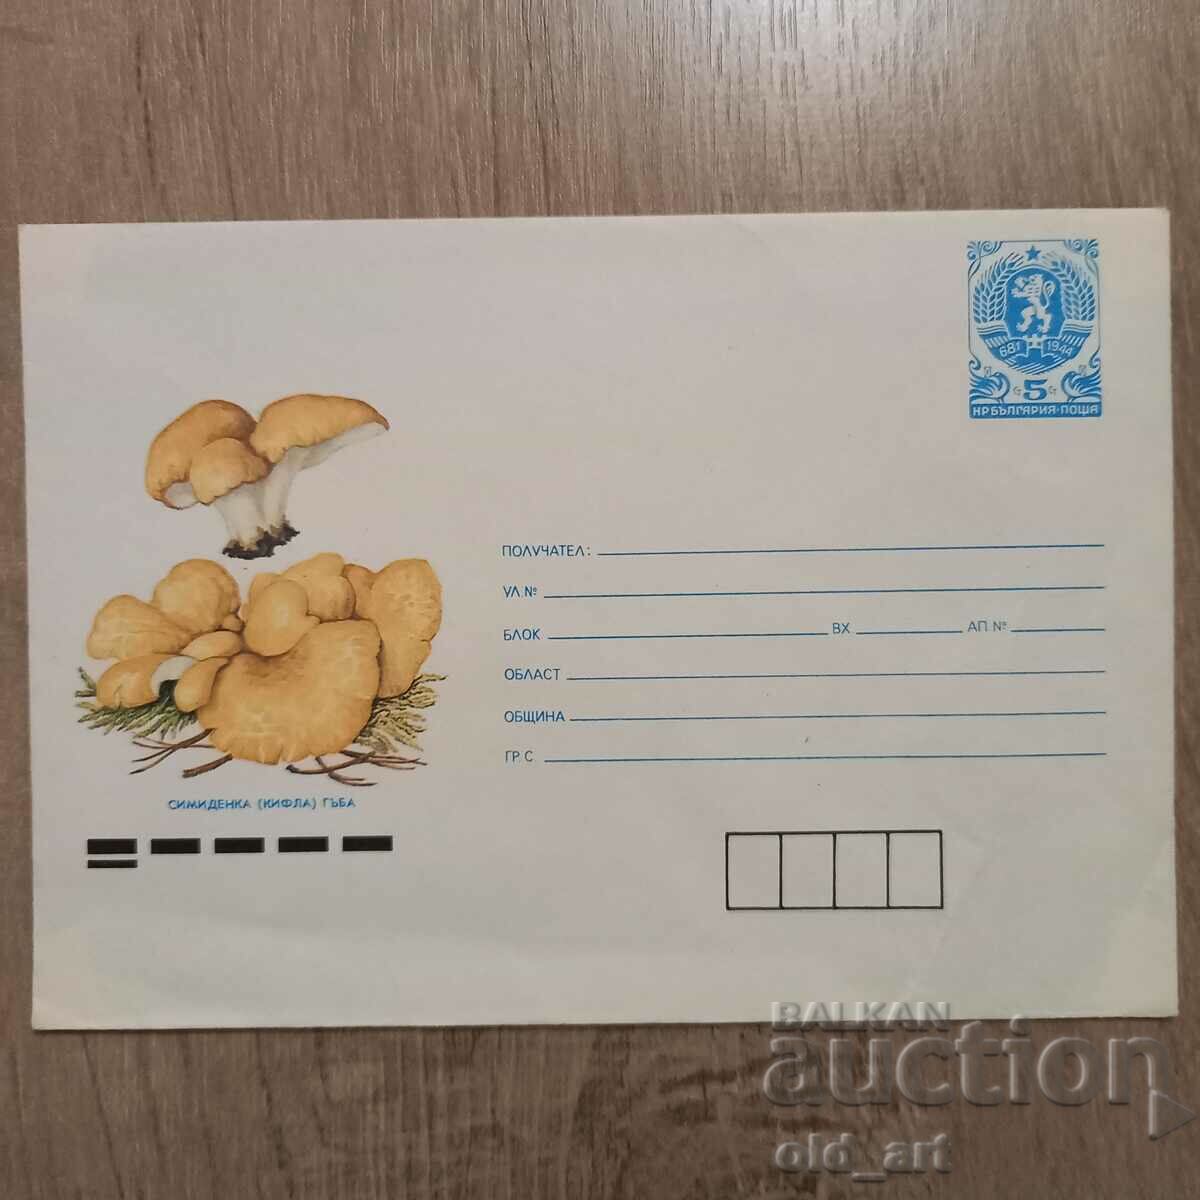 Postal envelope - Simidenka / bun / mushroom